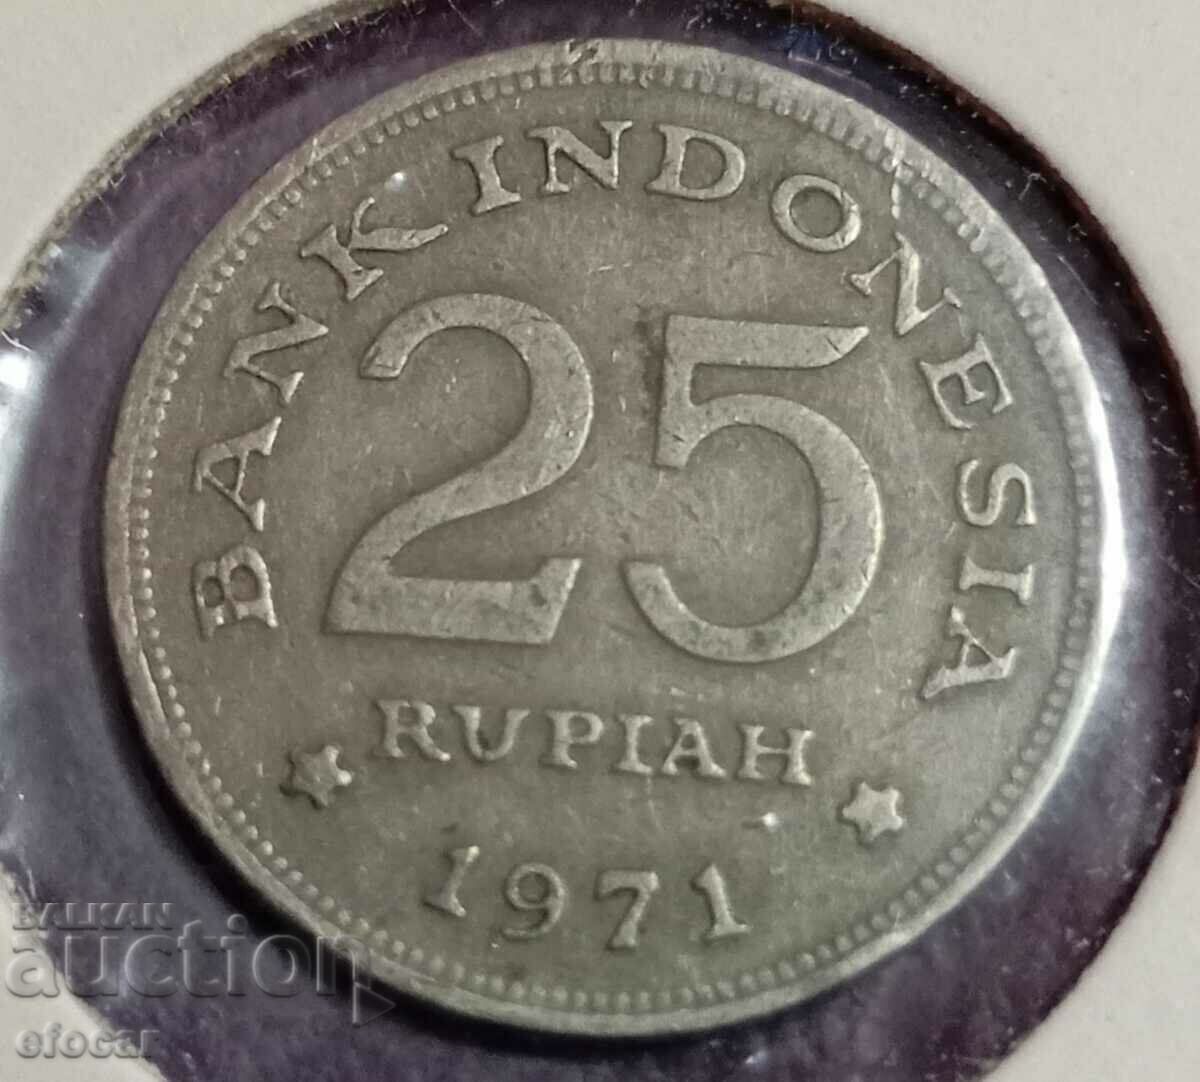 25 rupiah Indonesia 1971